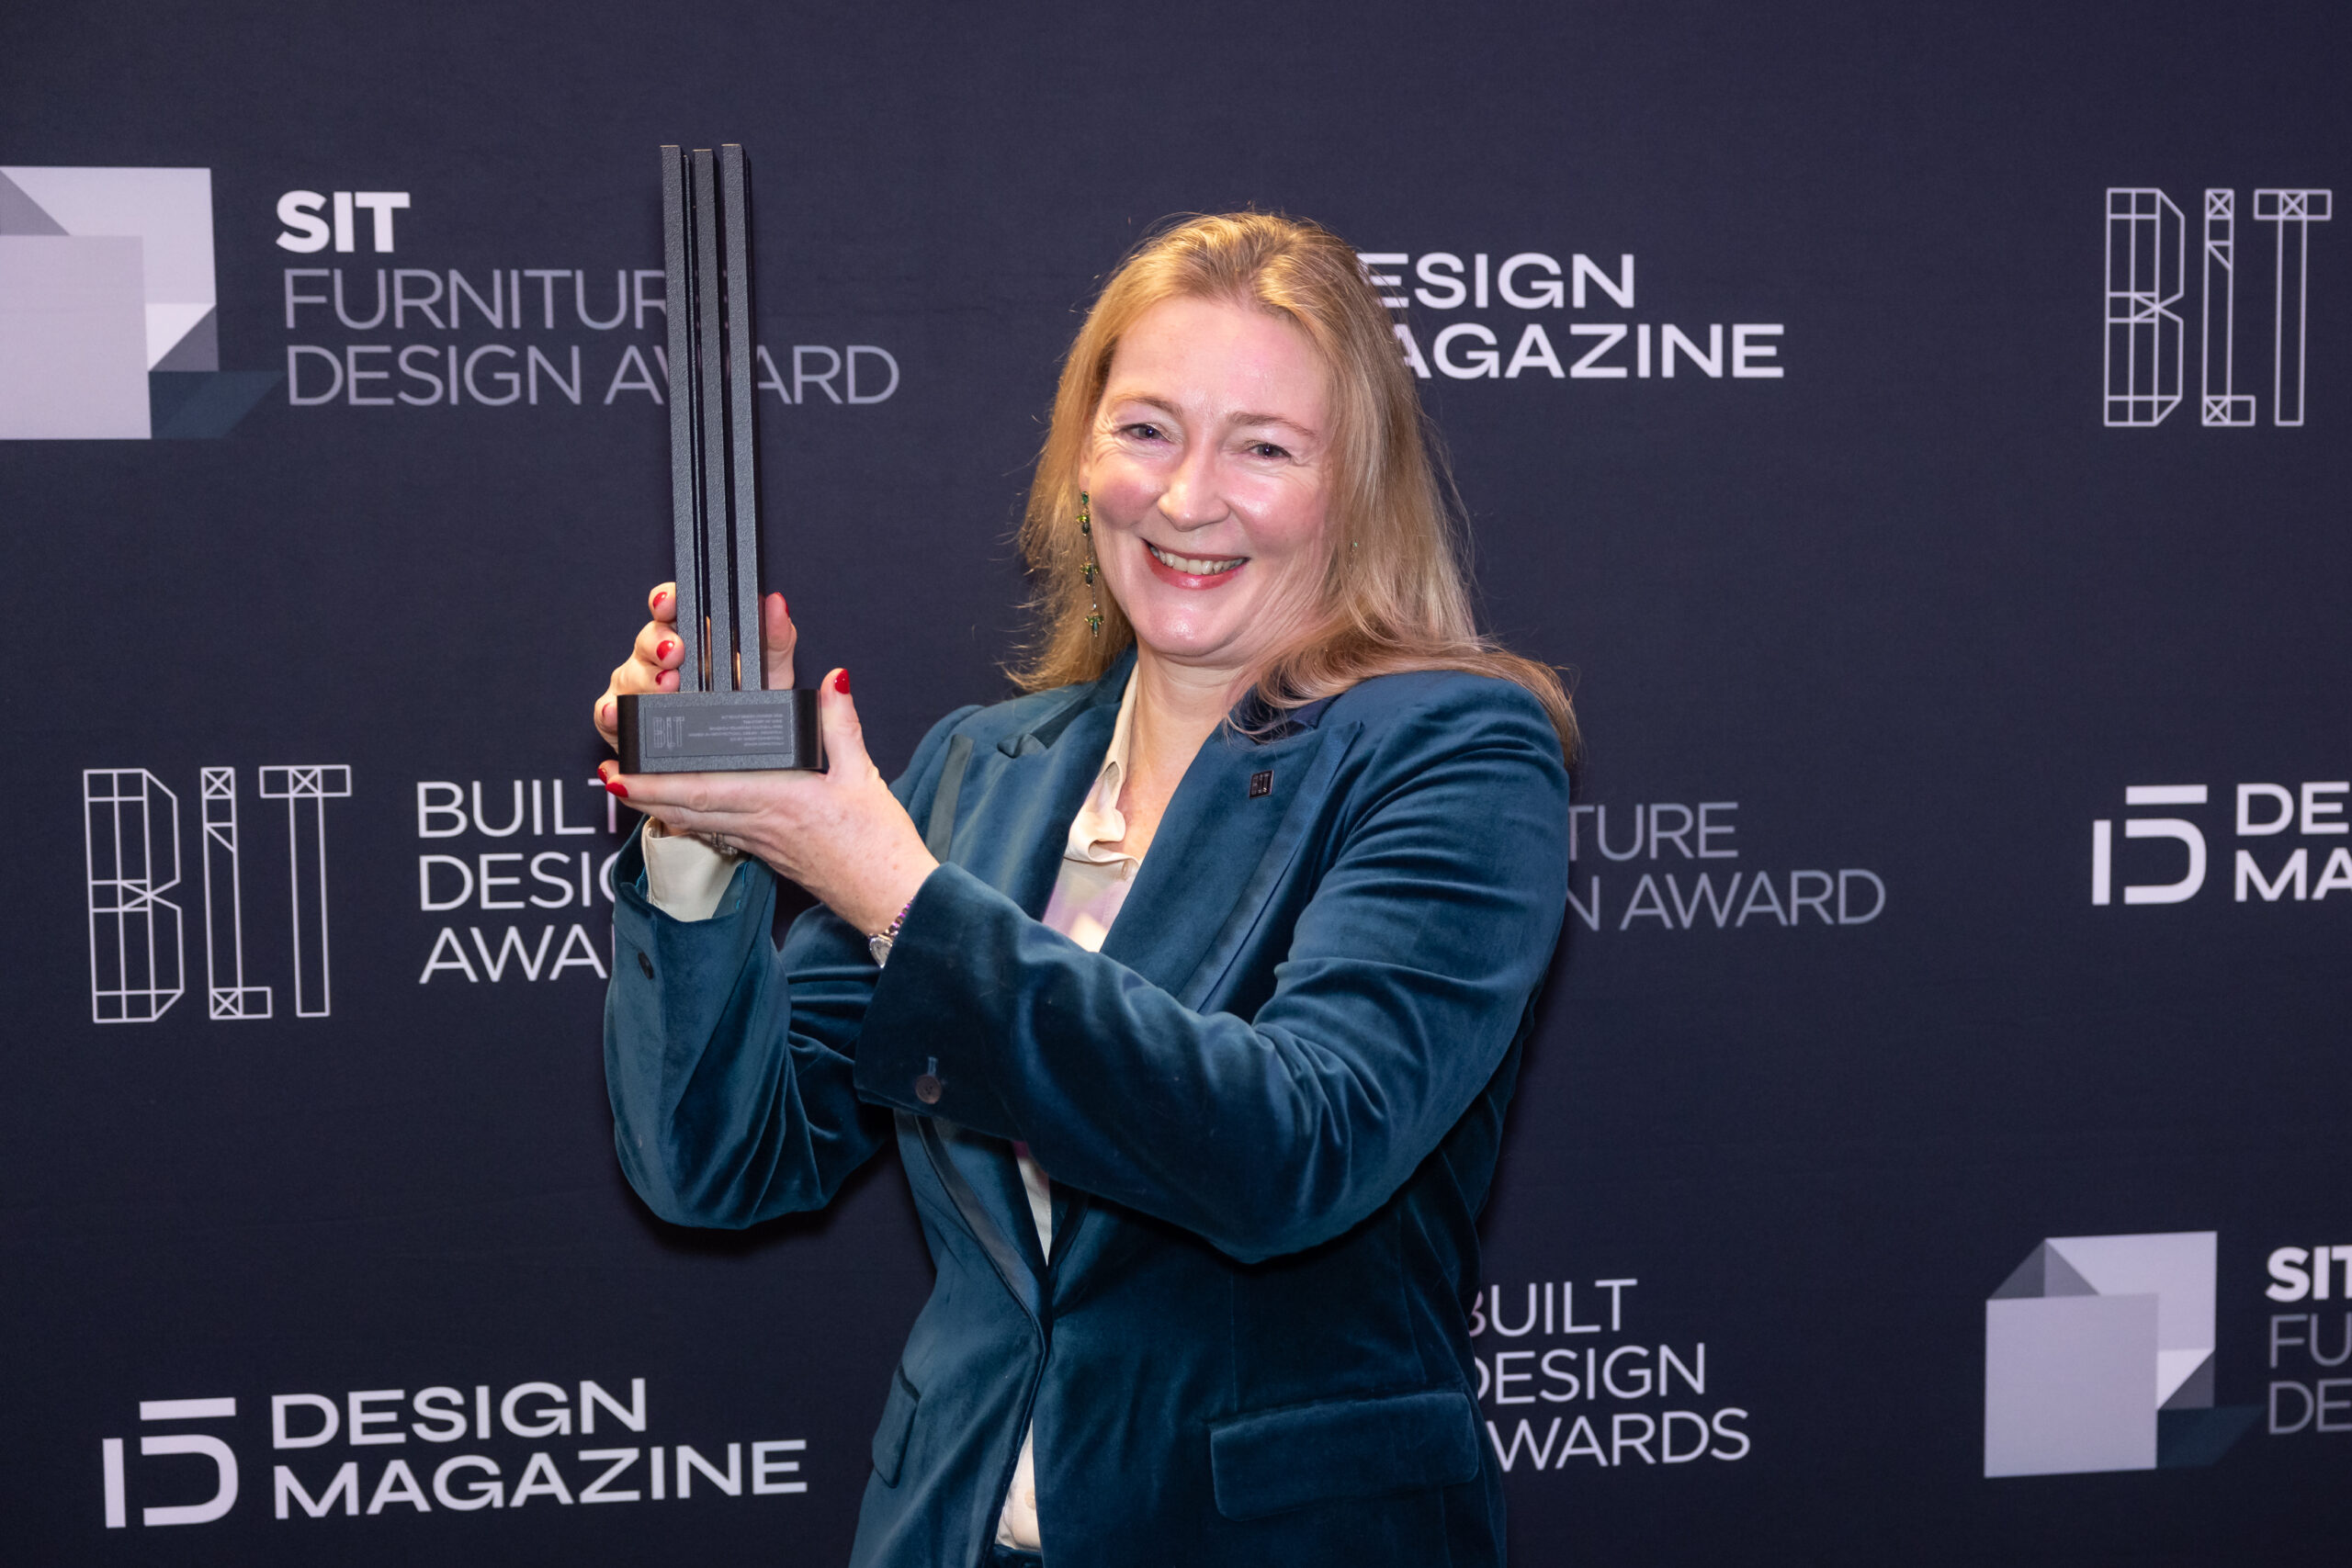 BLT Built Design Awards Gala Celebrates Architects and Designers Visionaries at the KKL Luzern in Switzerland